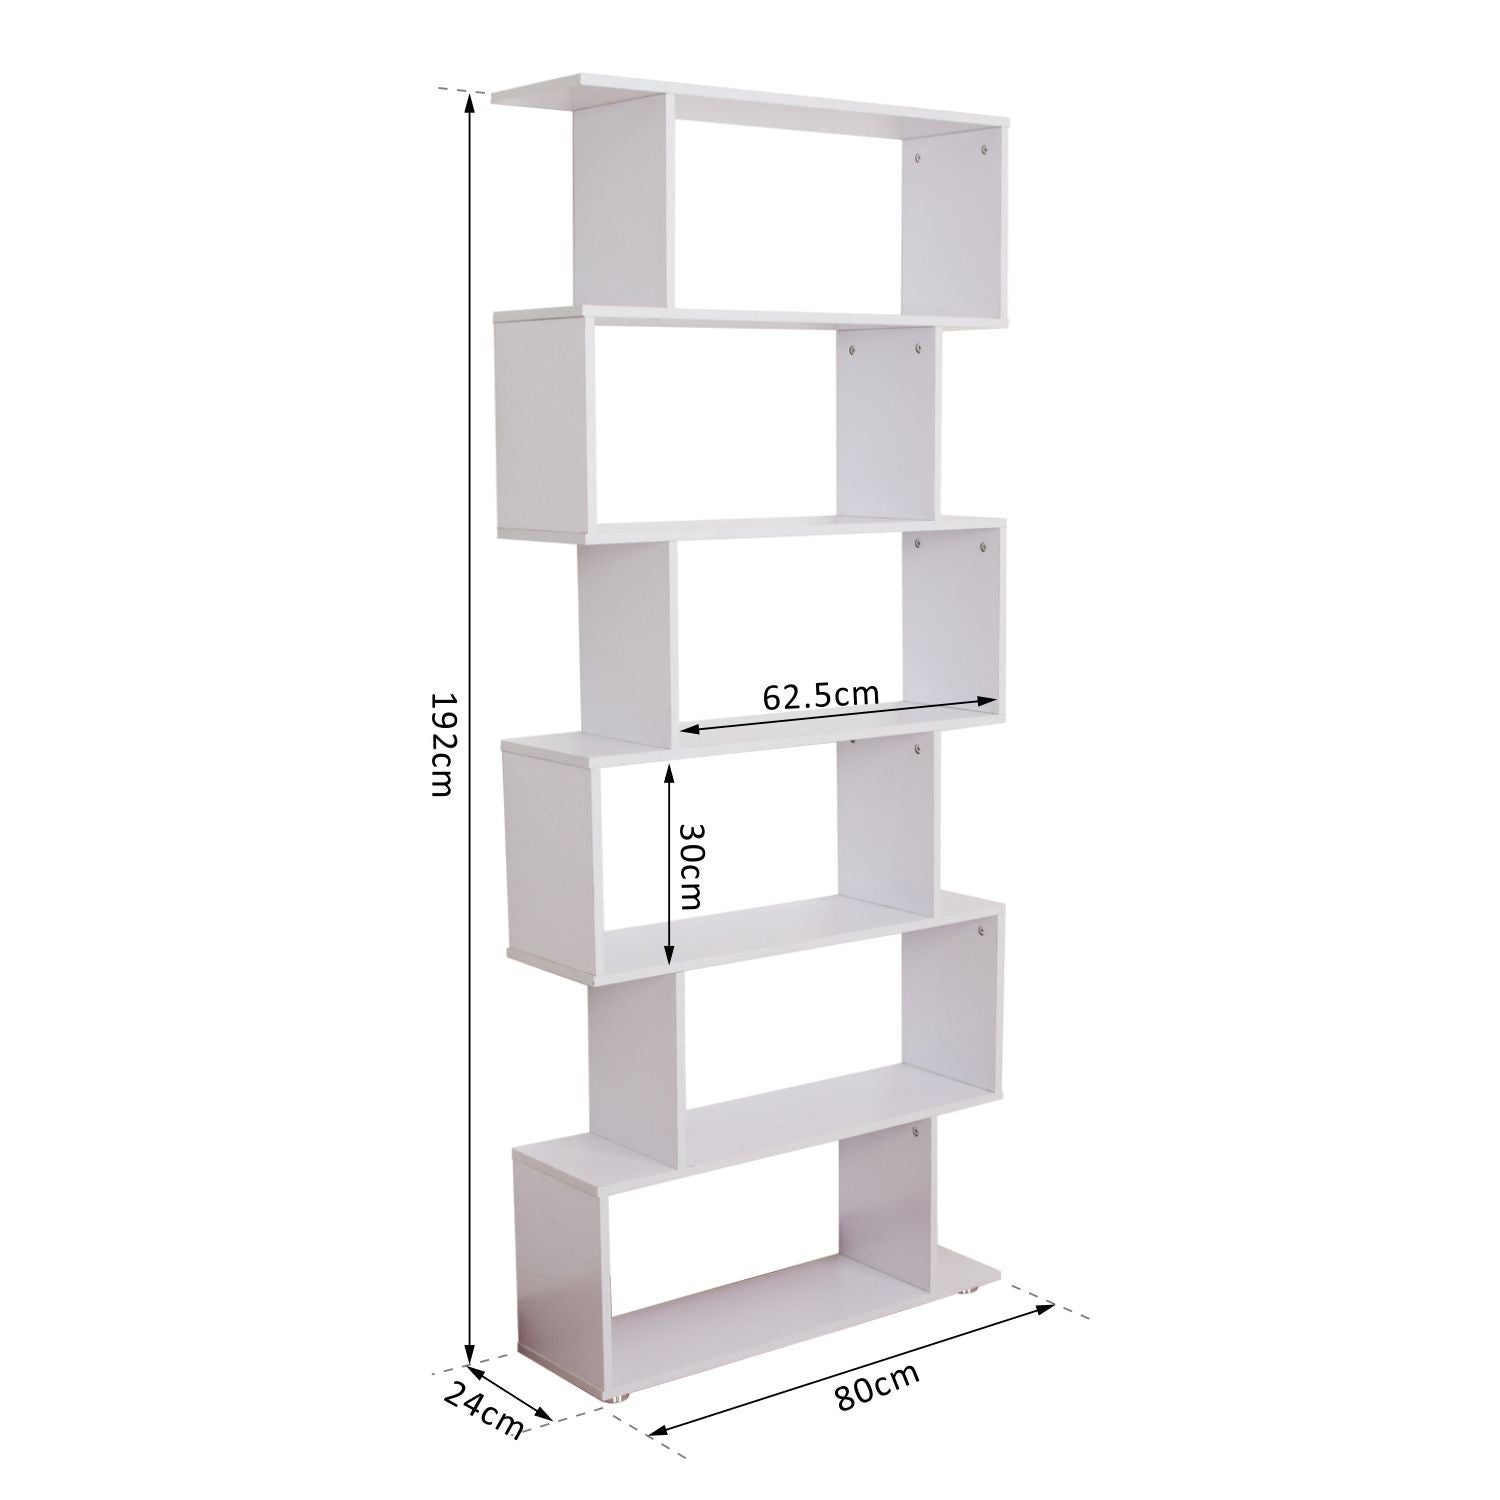 S Shape Wooden 6-tier Bookshelf, Open Concept Bookcase Storage Display Unit, Shelving Units, White, HOMCOM, 3